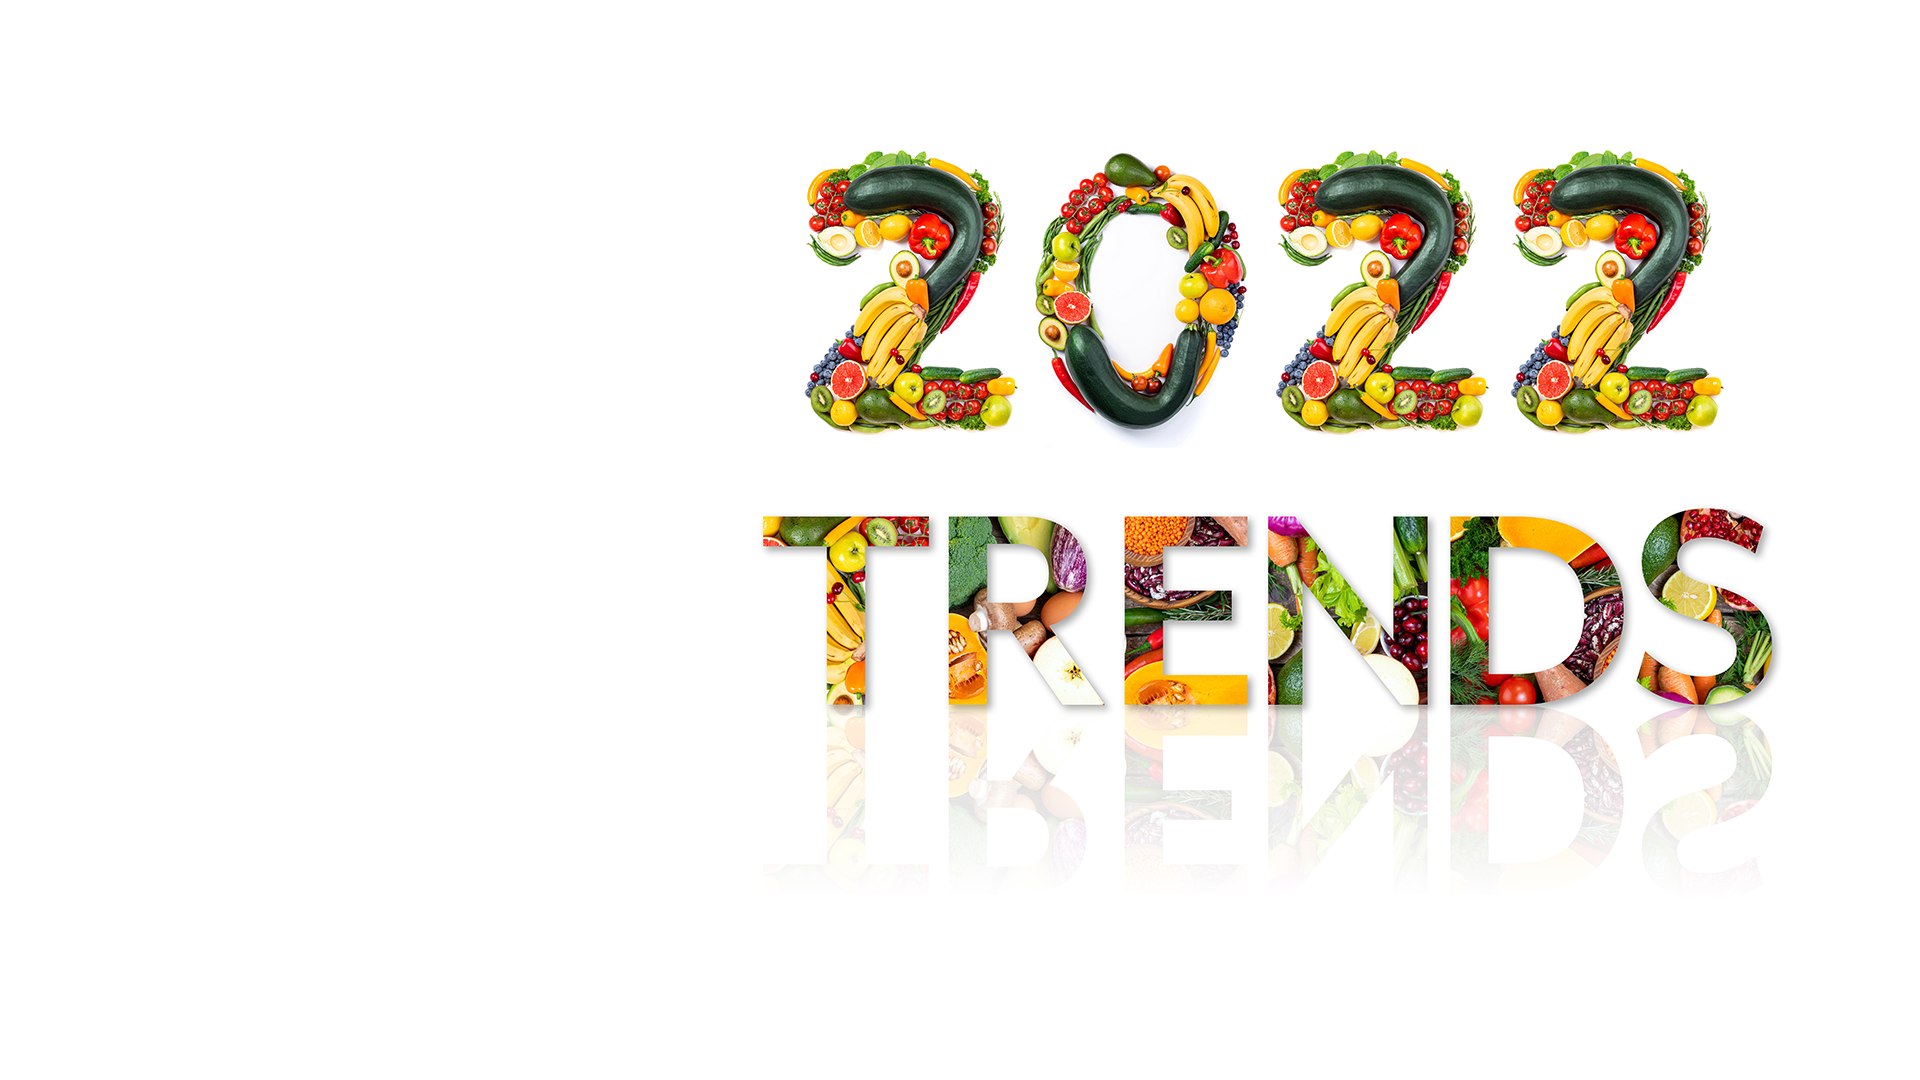 Food Industry Trends 2022